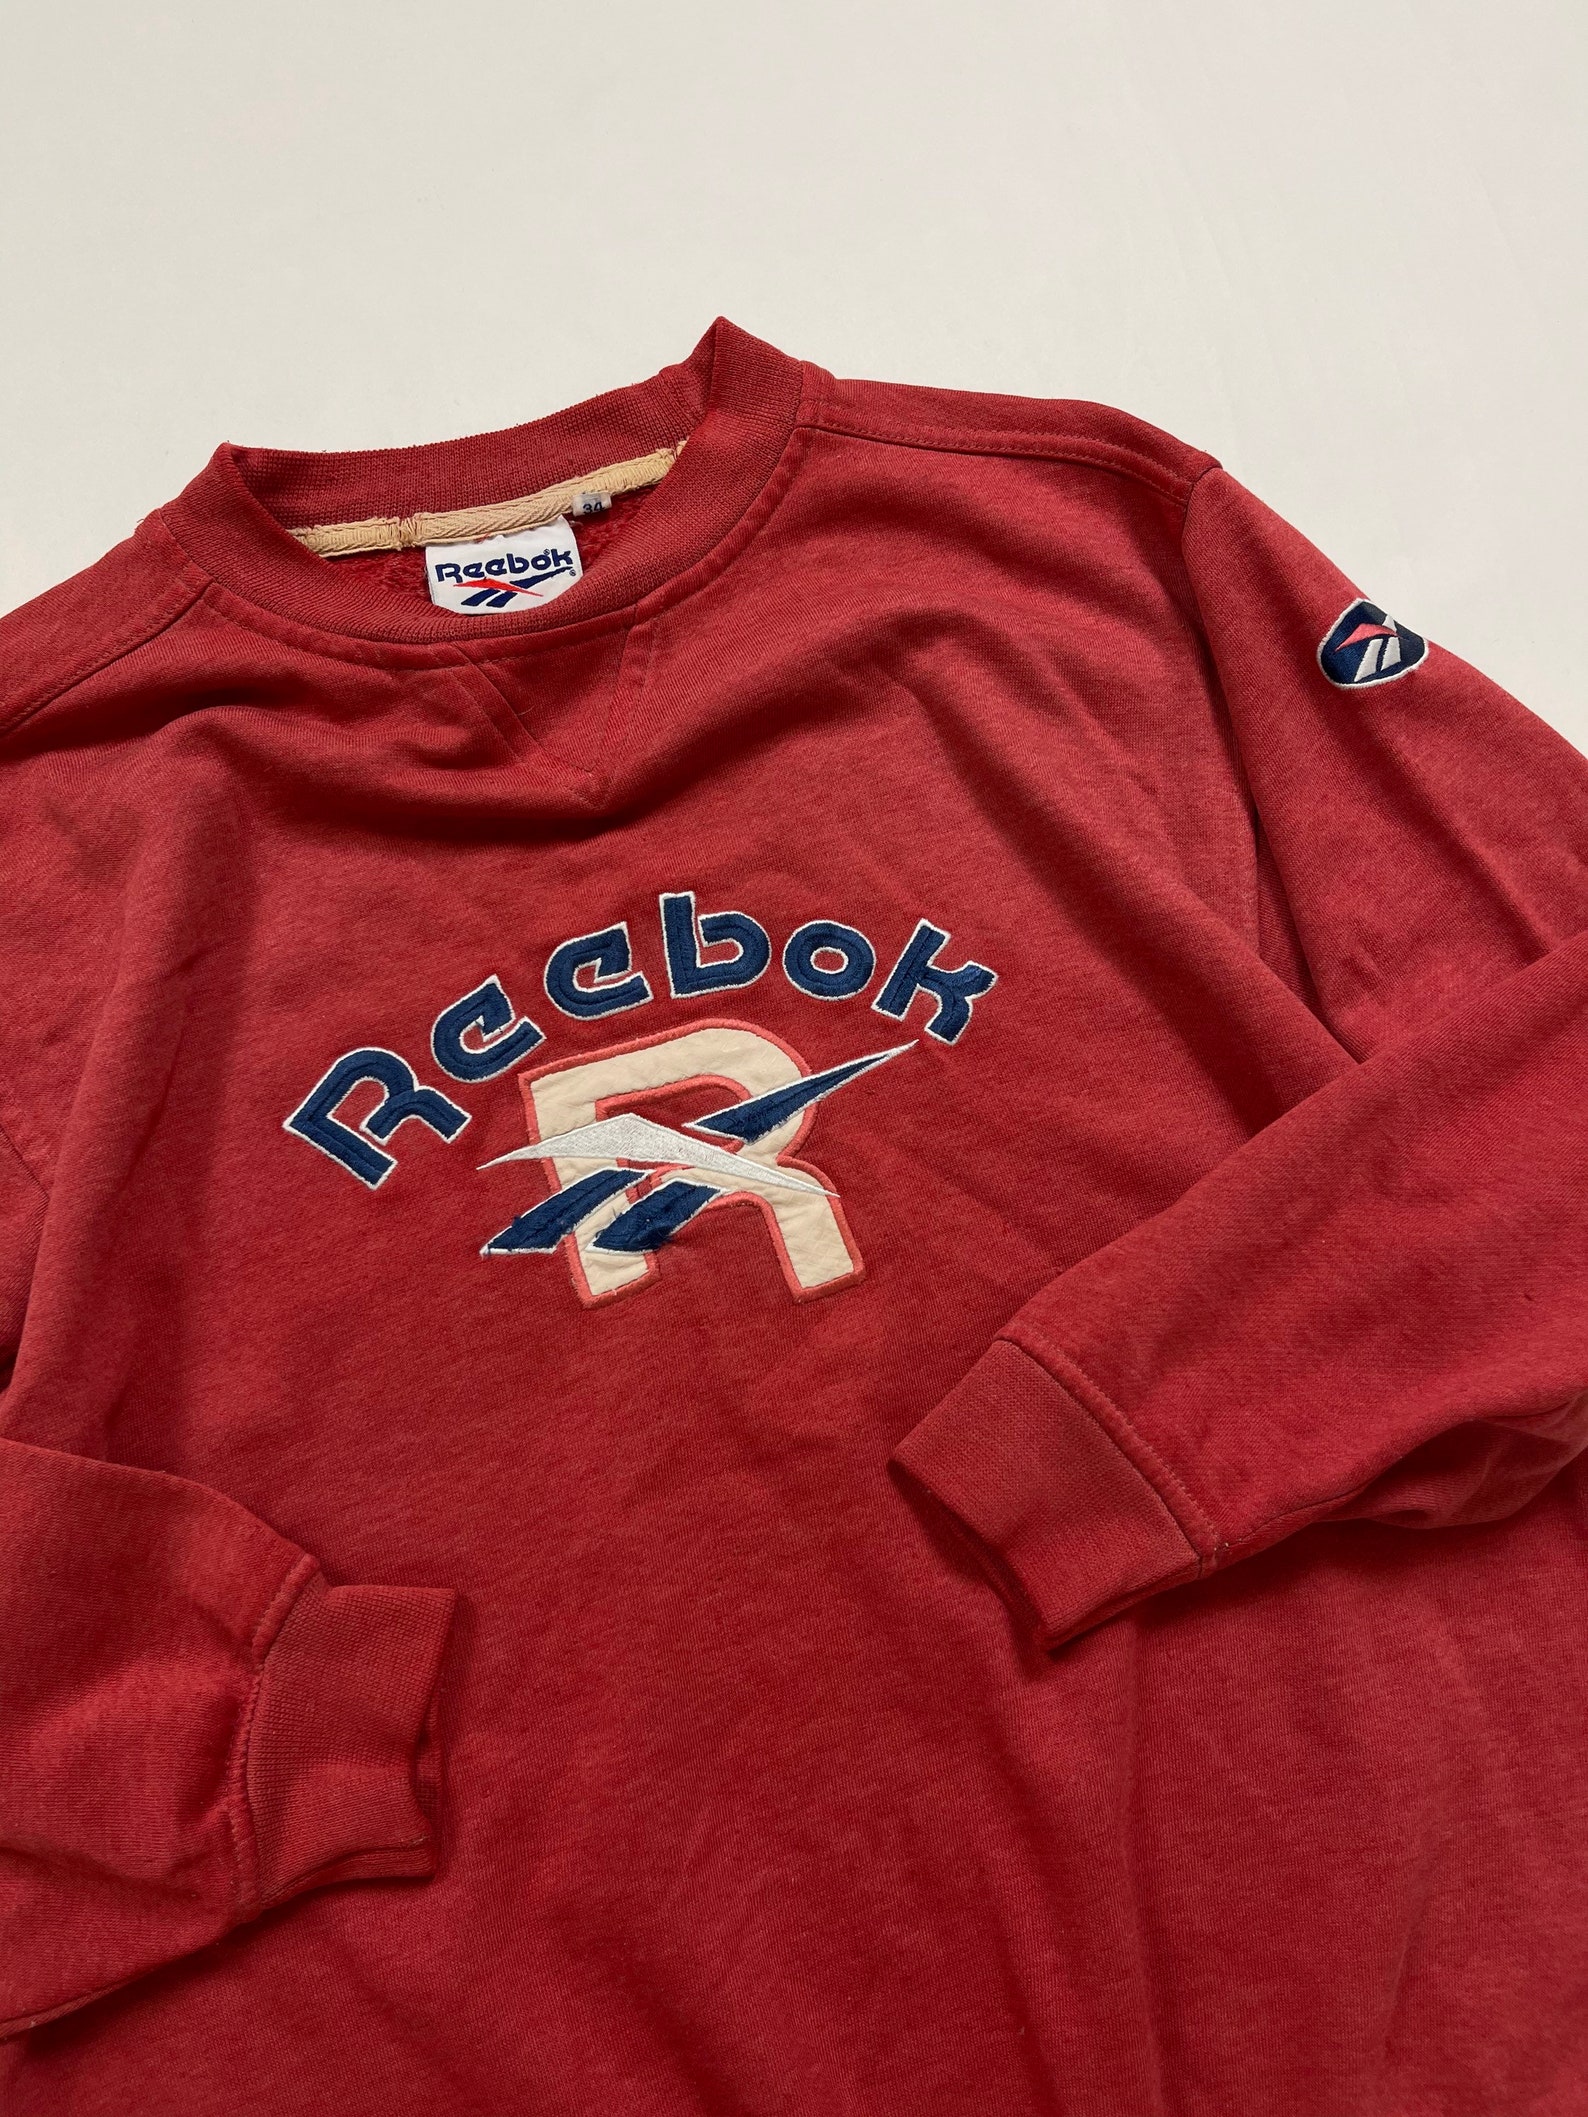 Reebok equipment vintage sweatshirt big logo crewneck vntg 90s | Etsy